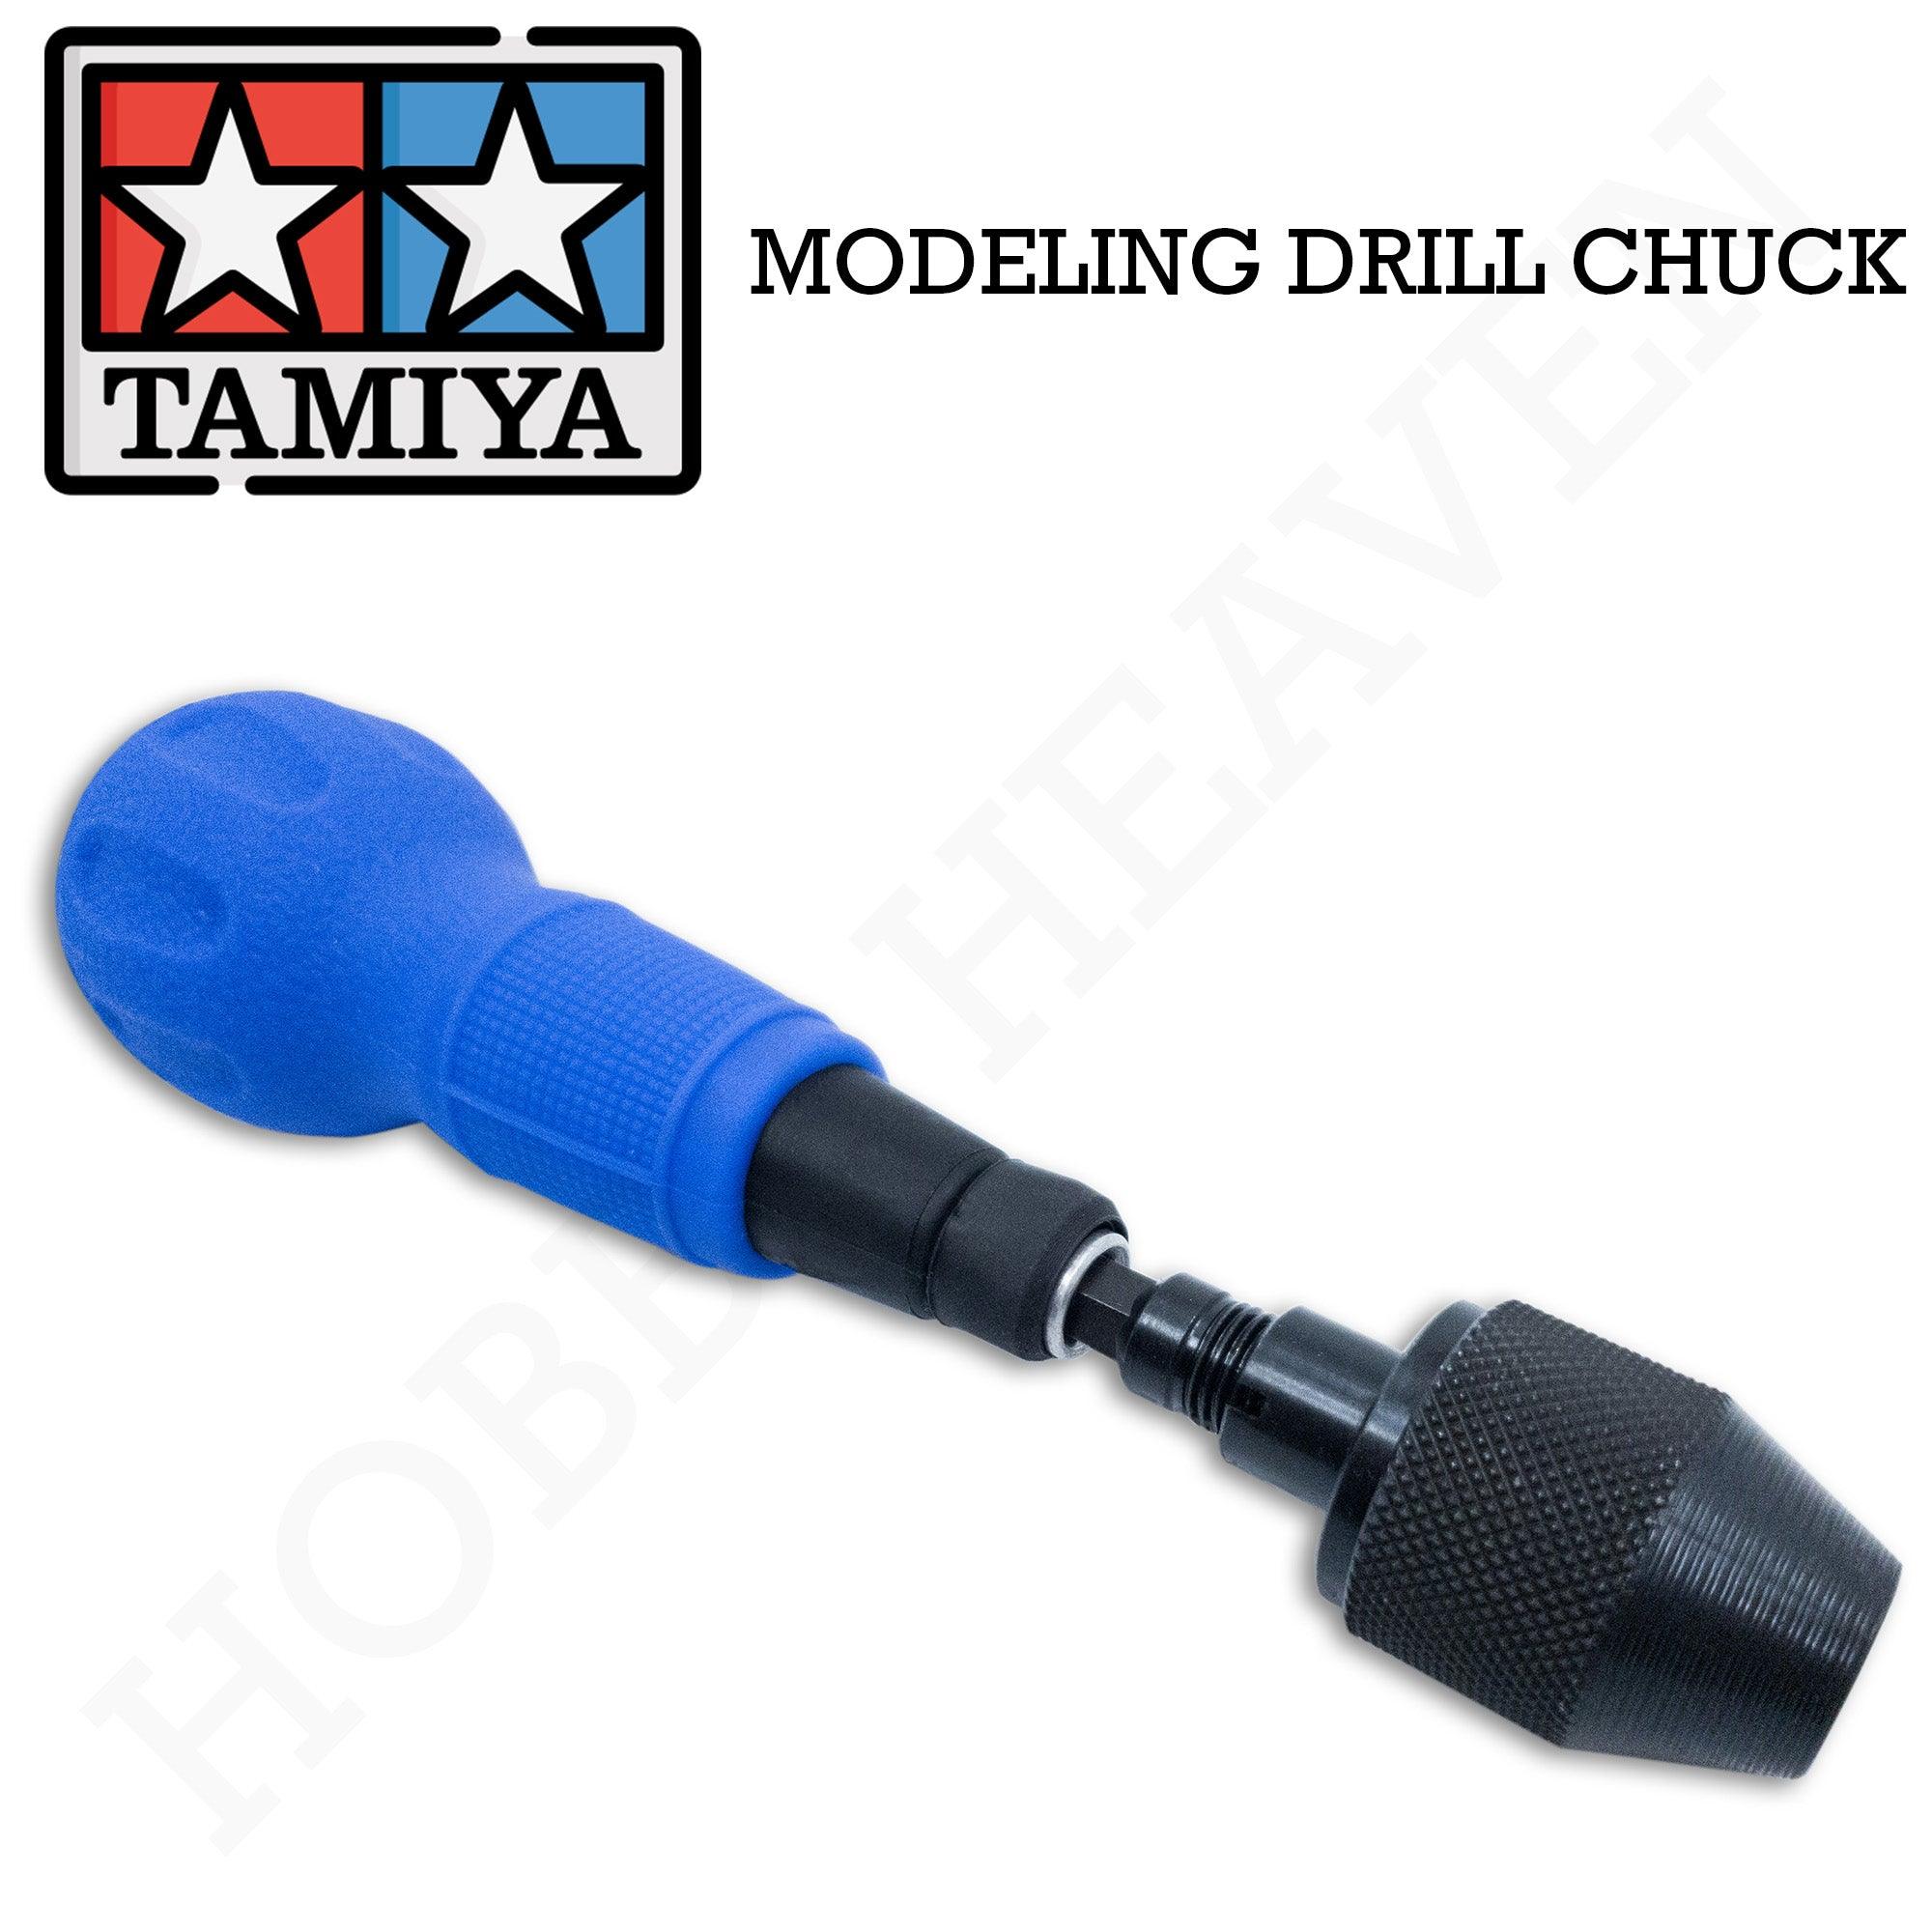 Tamiya Modeling Drill Chuck 74086